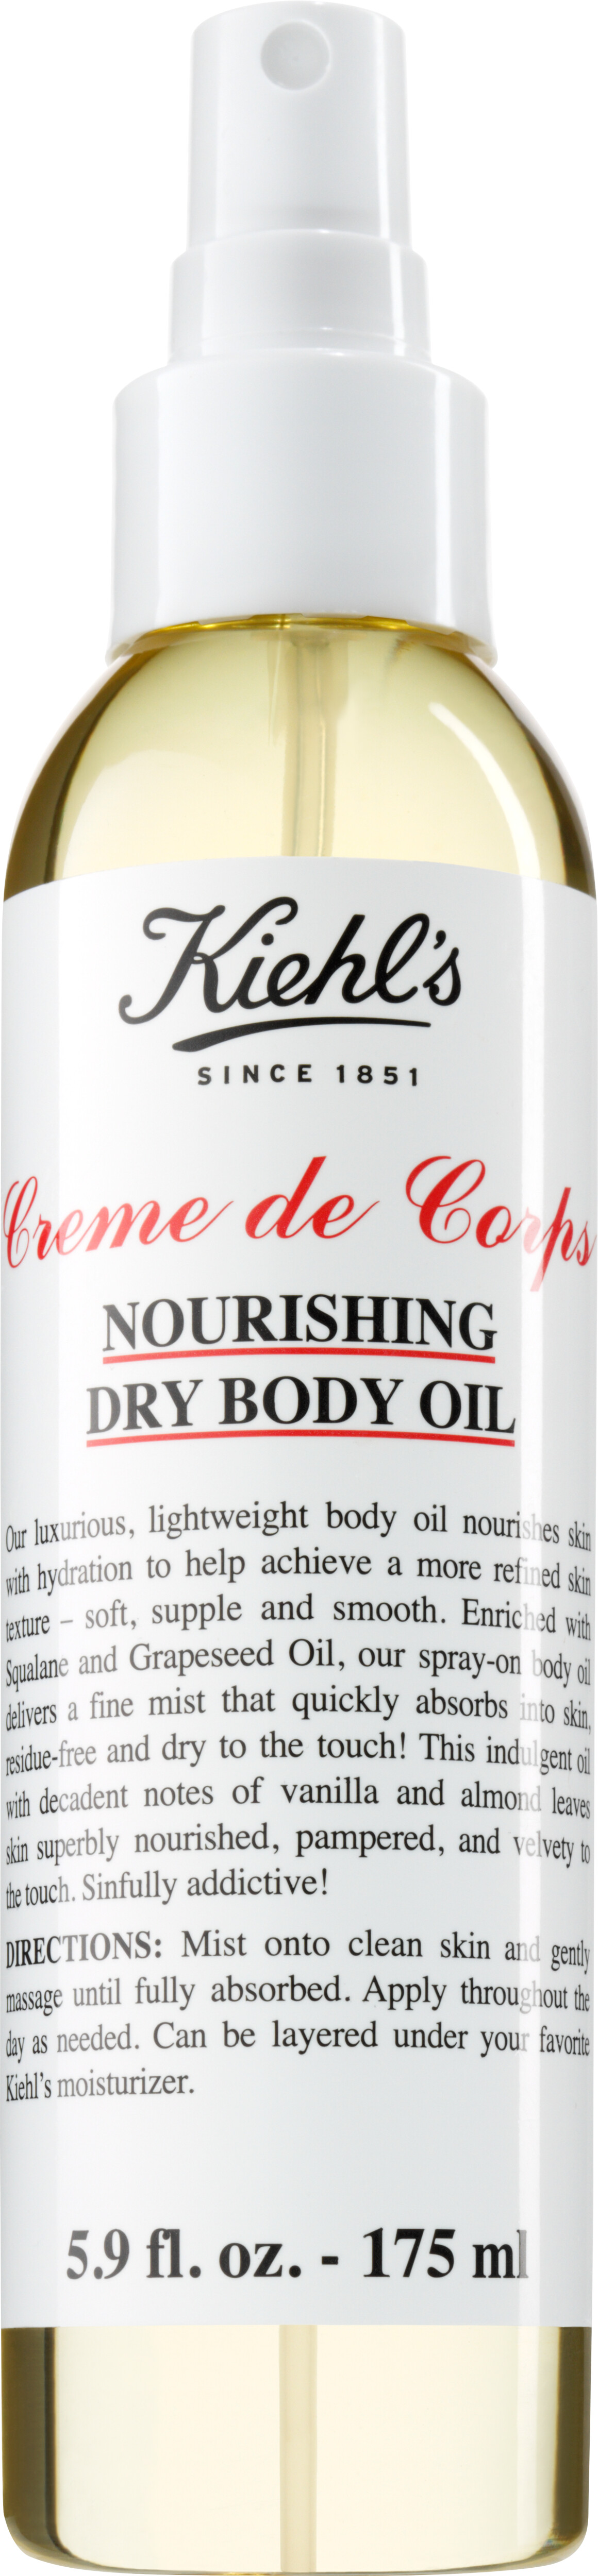 Kiehl's Creme de Corps Nourishing Dry Body Oil 175ml